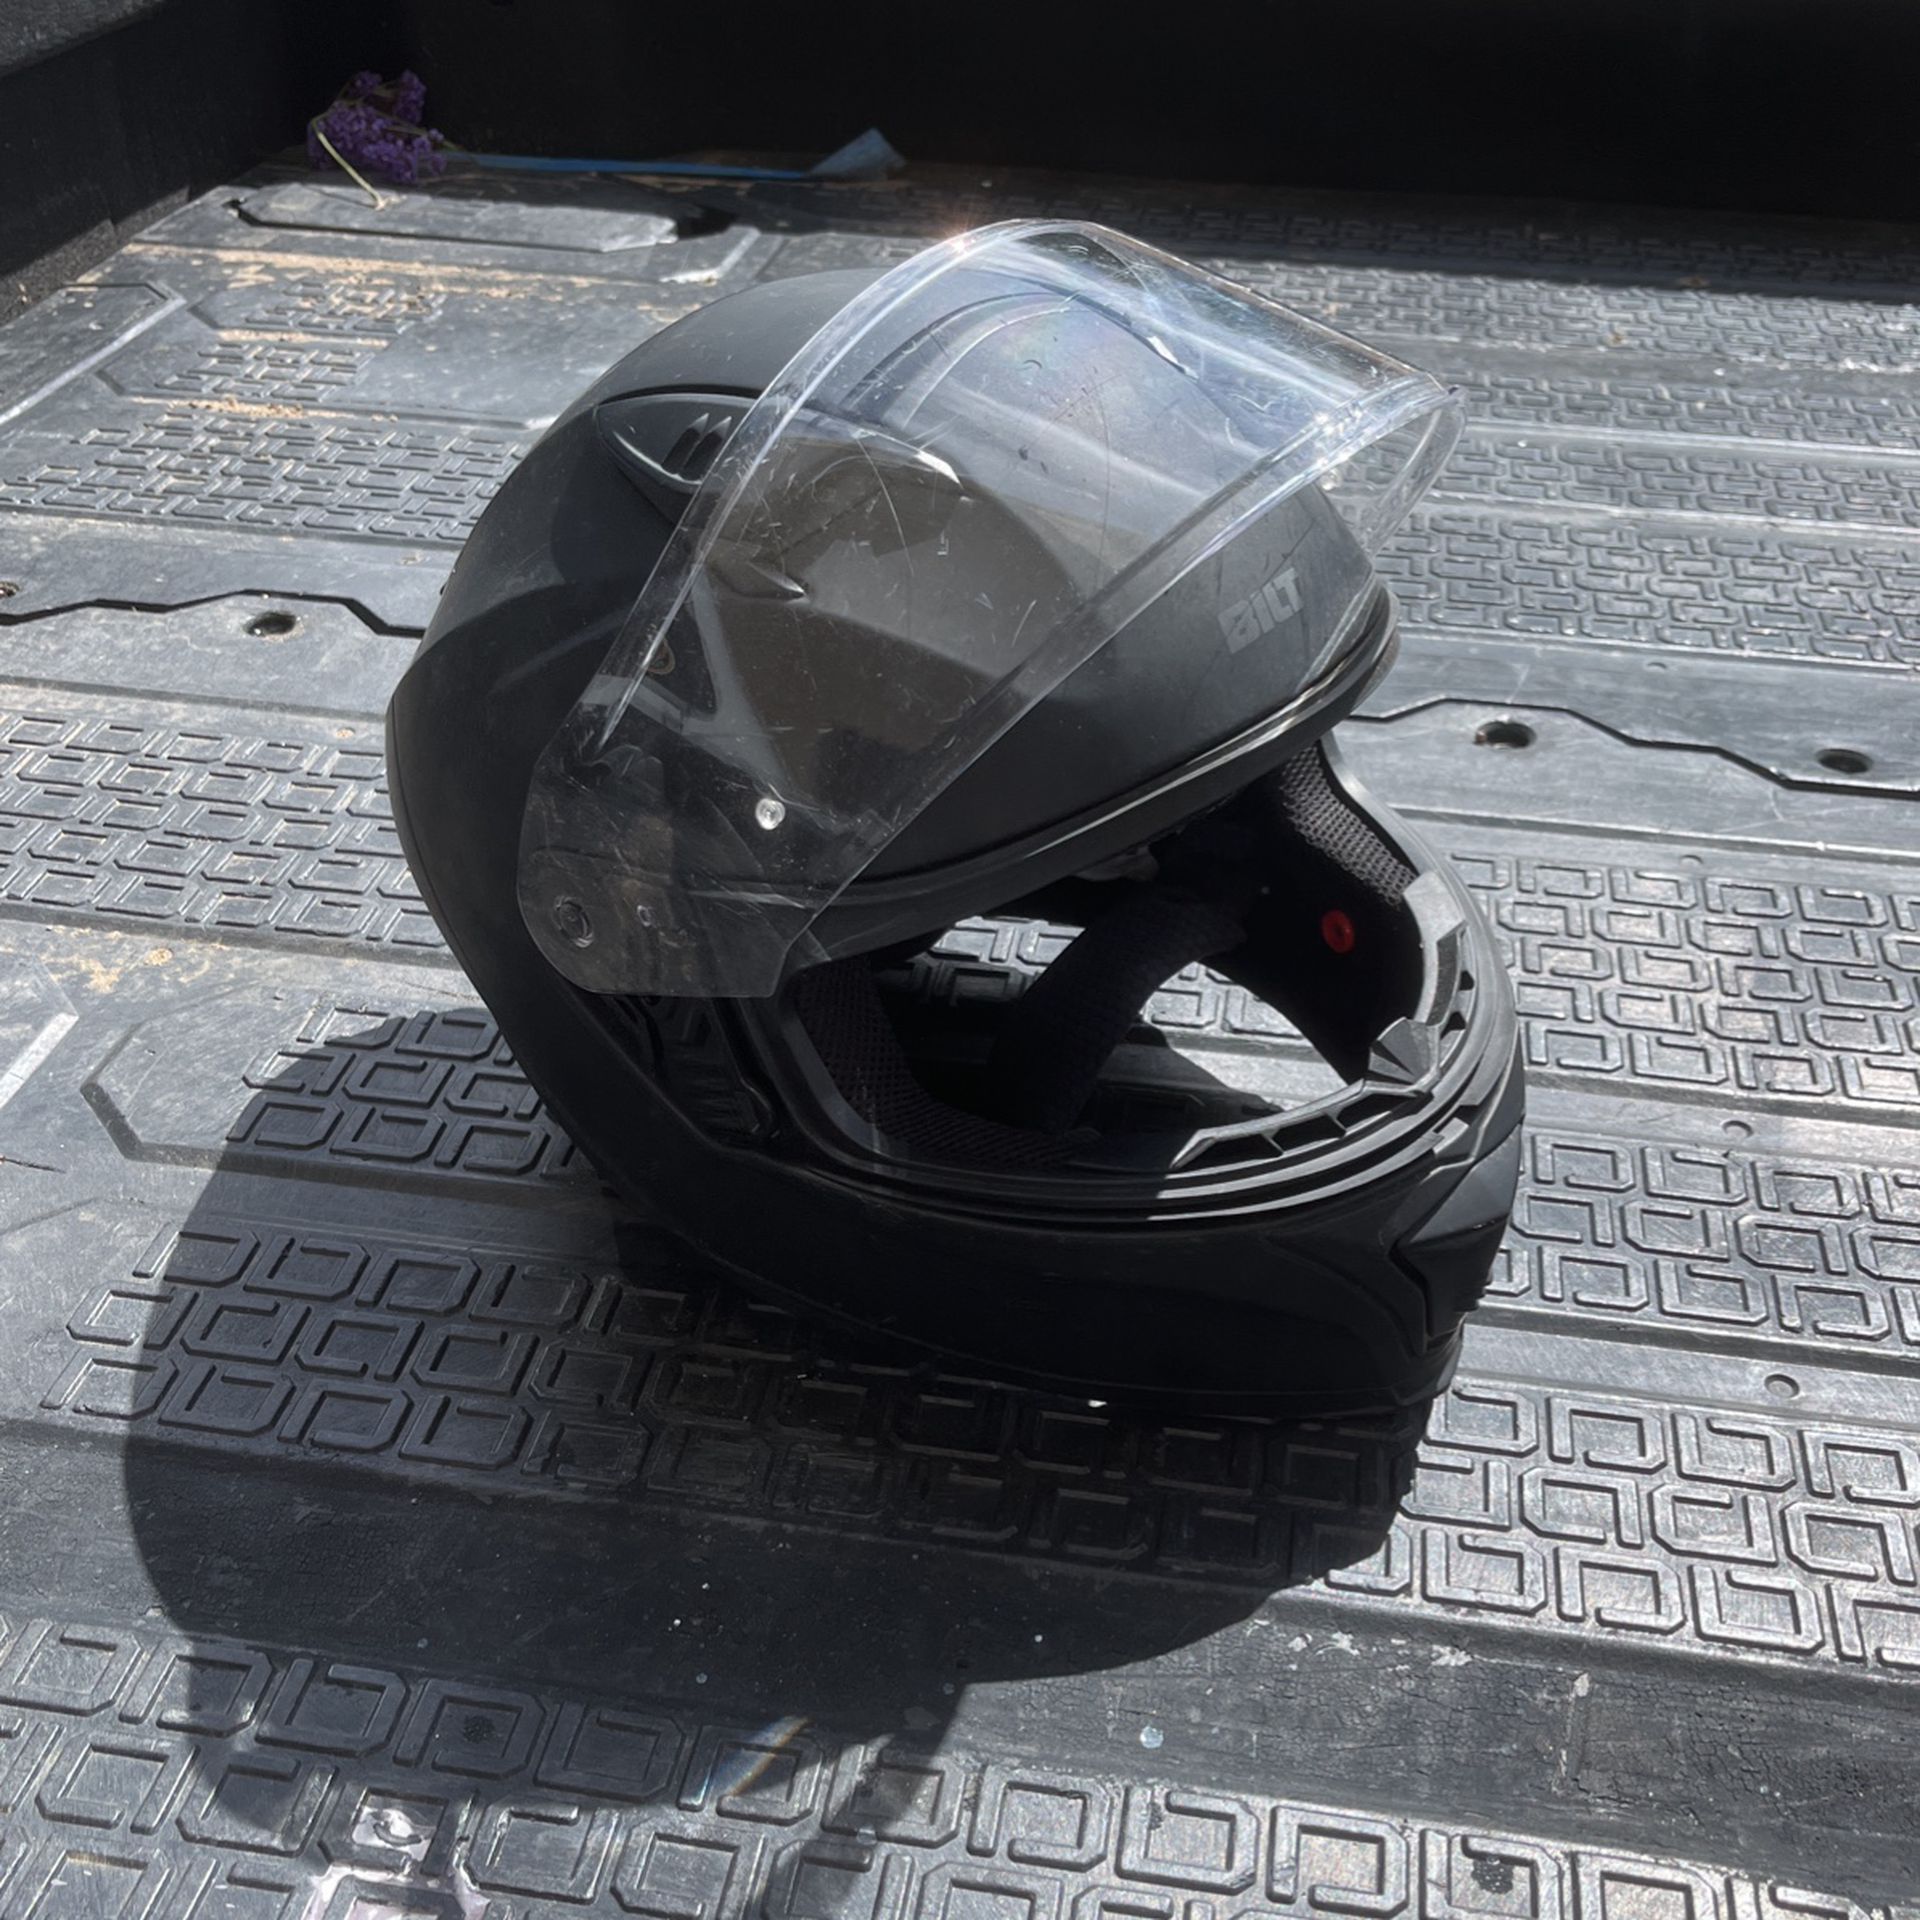 BILT Motorcycle Helmet: All Black